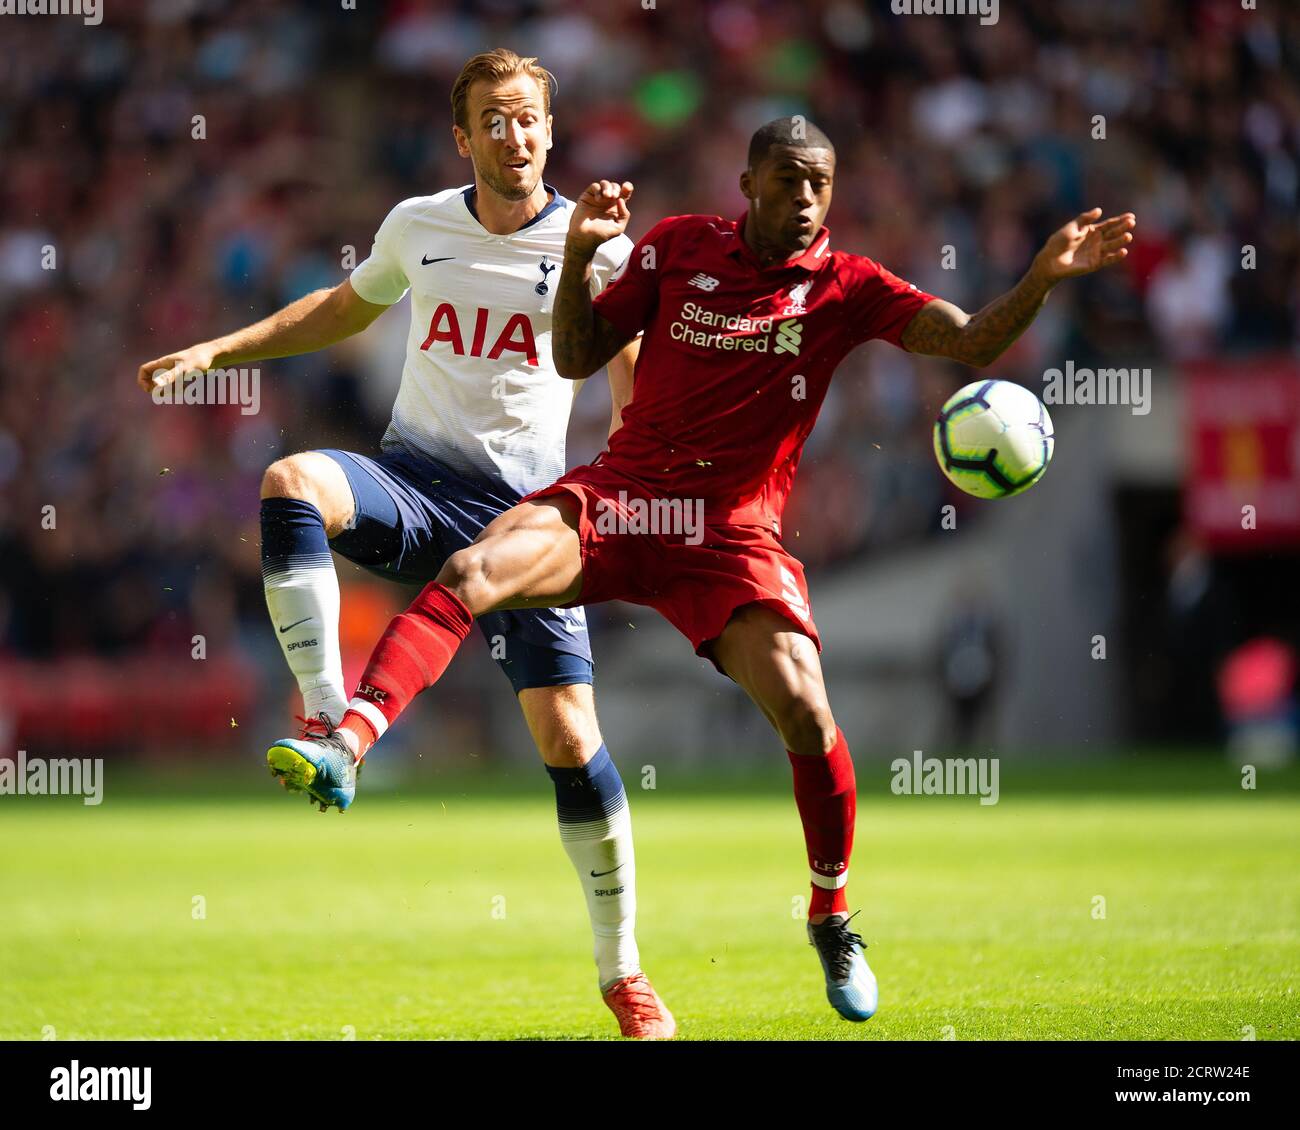 Tottenham Hotspur's Harry Kane and Liverpool's Georgino Wijnaldum  PHOTO CREDIT : © MARK PAIN / ALAMY STOCK PHOTO Stock Photo